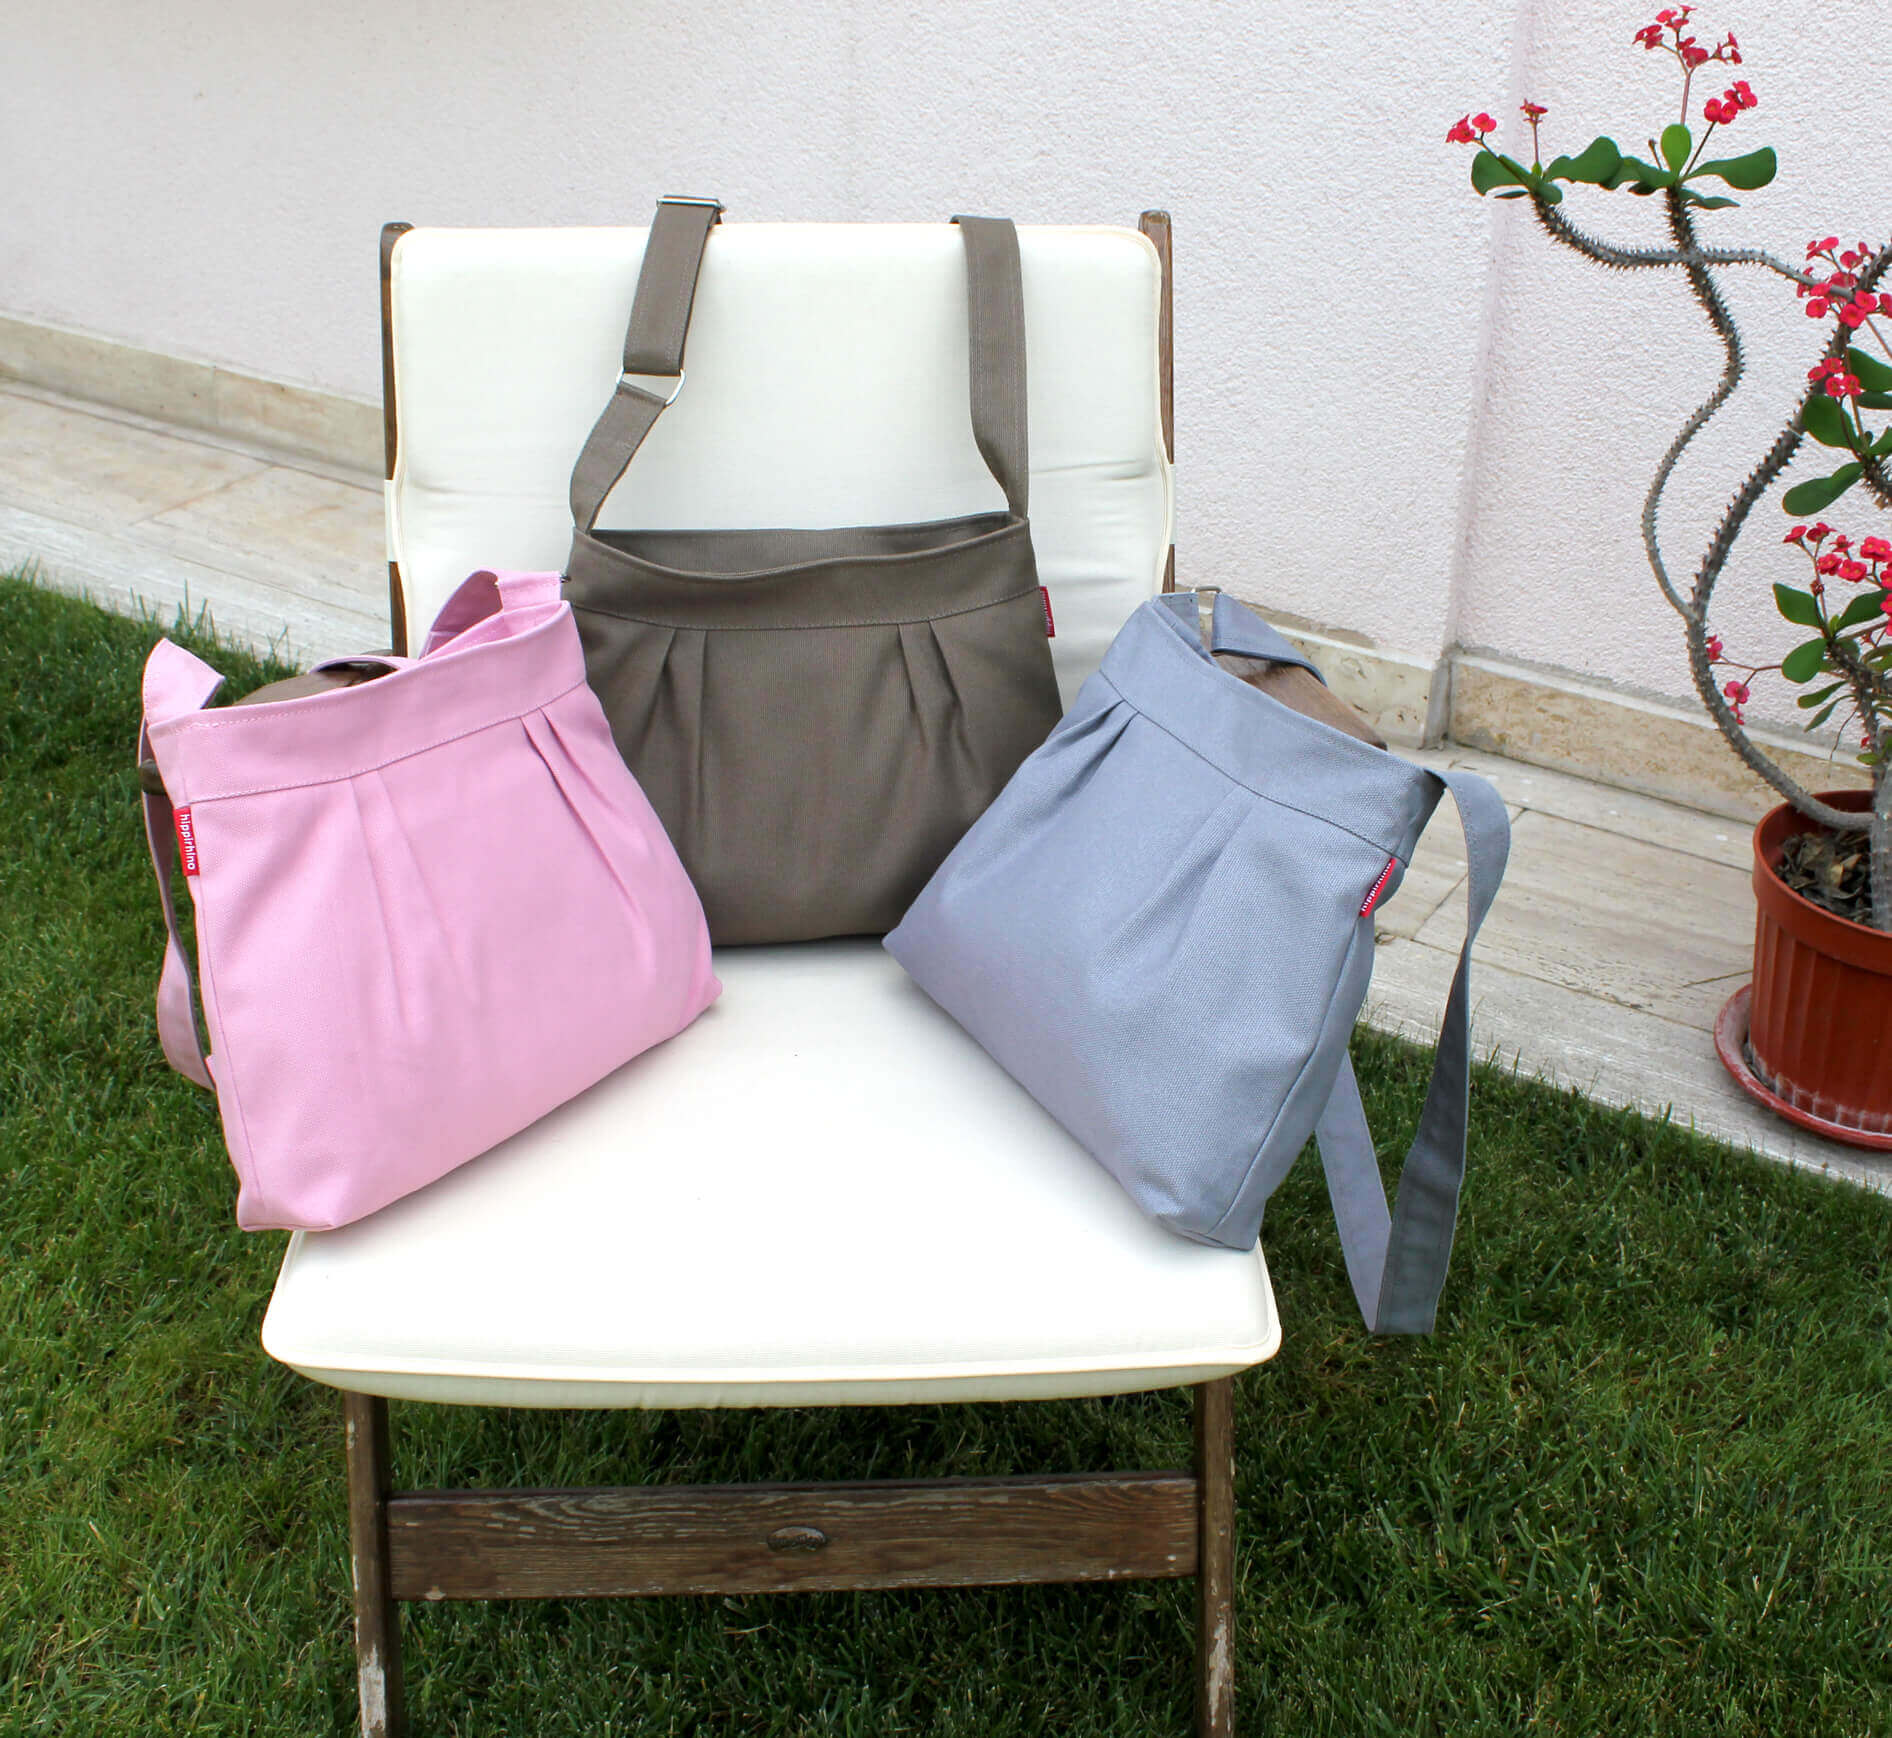 Cotton Candy Pink And Cadmium Green Checkerboard Purse Bag Handbag PAN -  Bestiewisdom